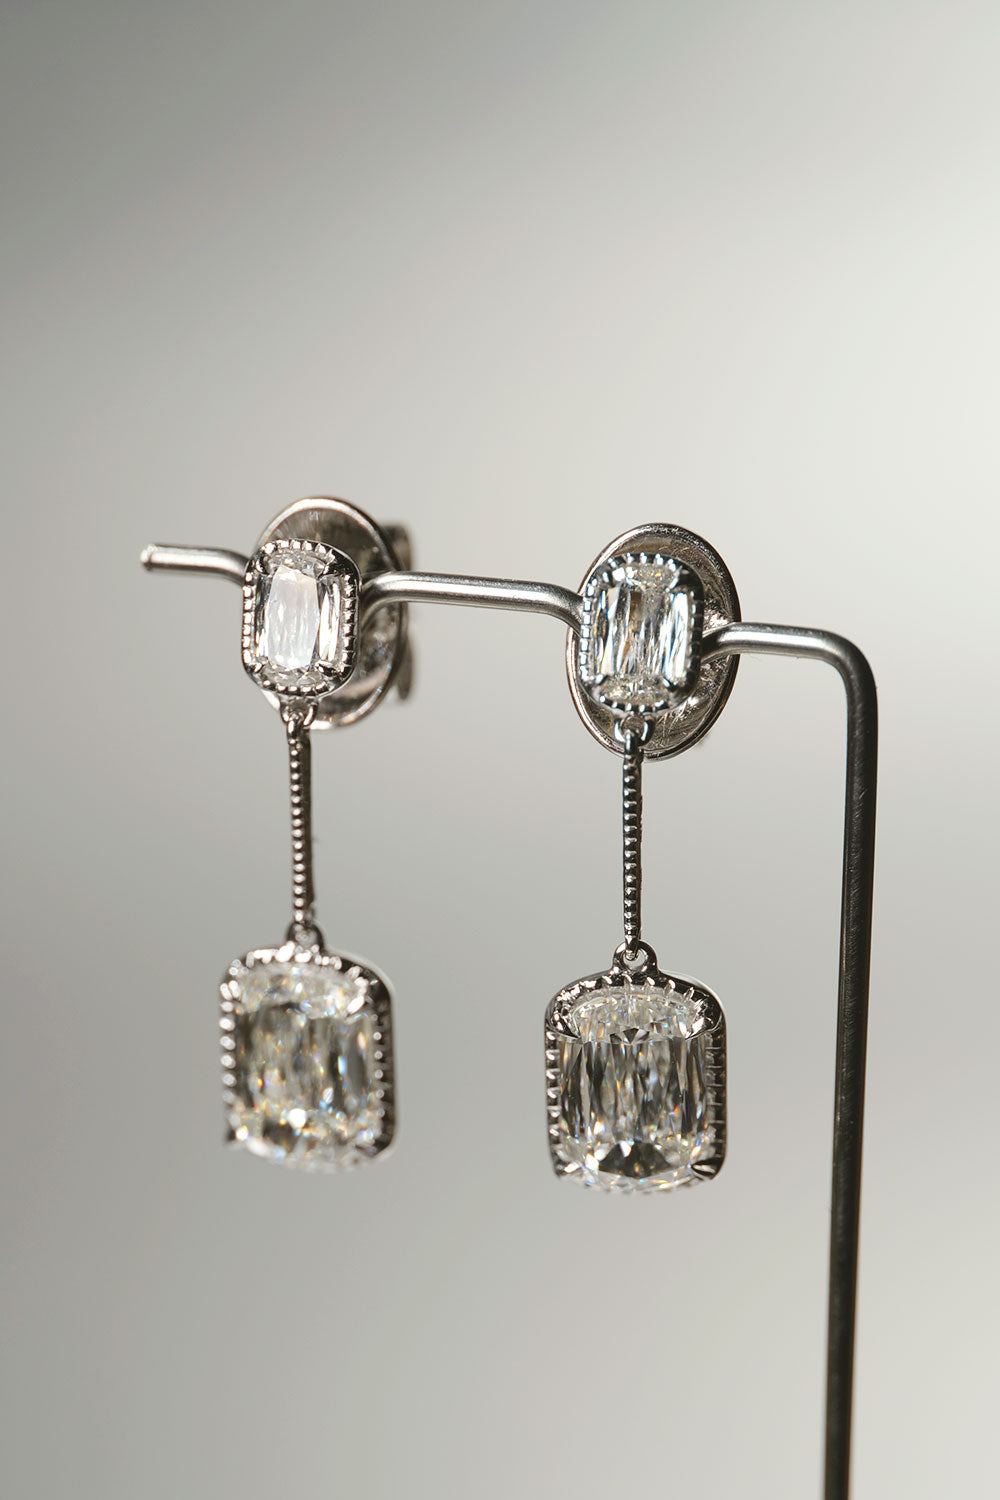 1.03ct Modified Rectangular Brilliant Cut Diamond Earrings